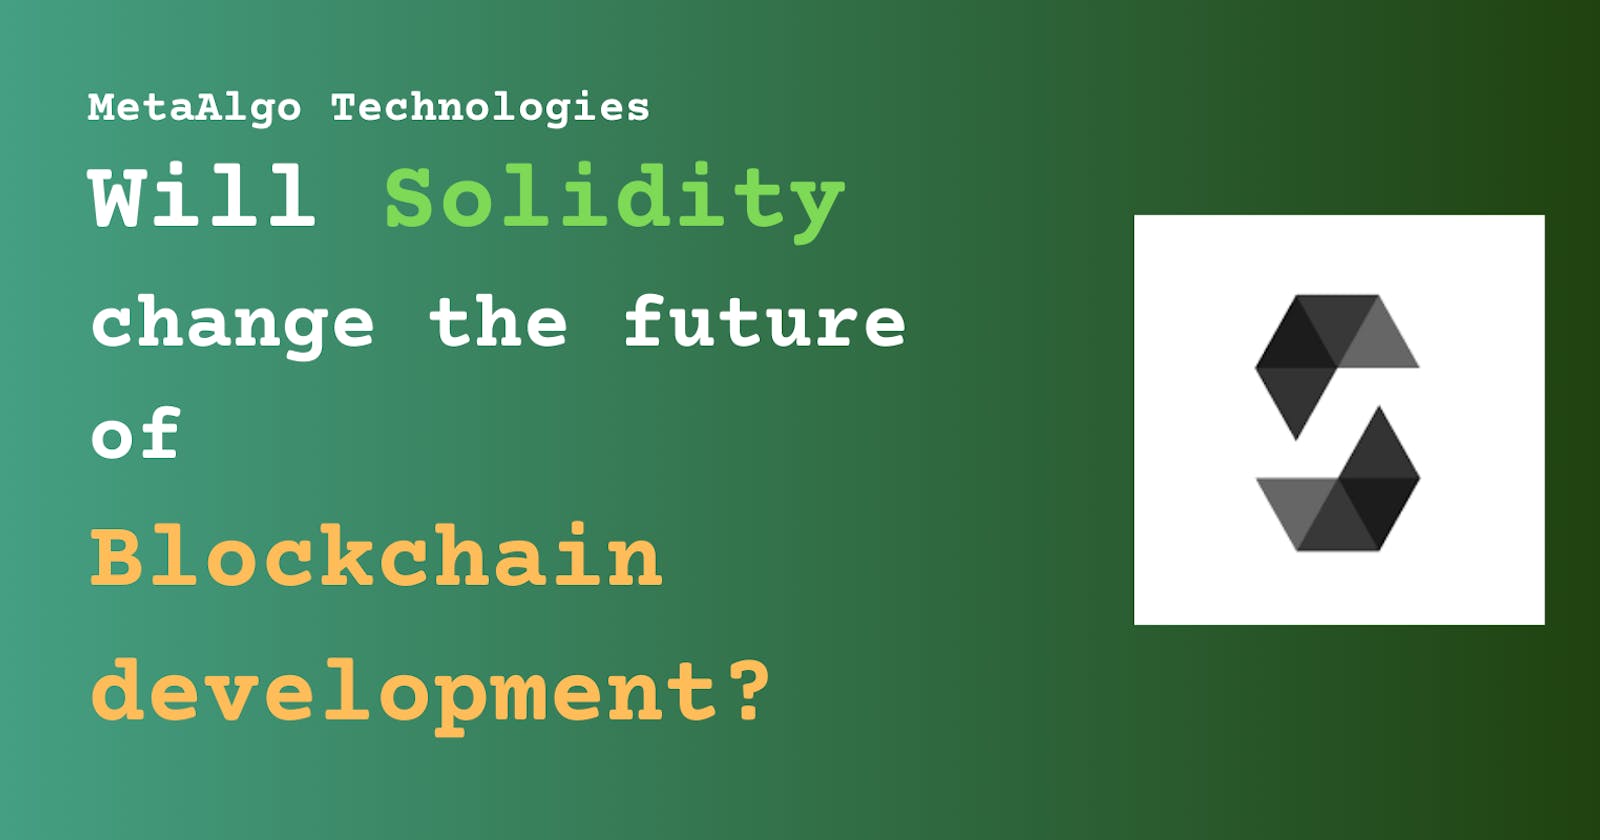 Will Solidity change the future of blockchain development?